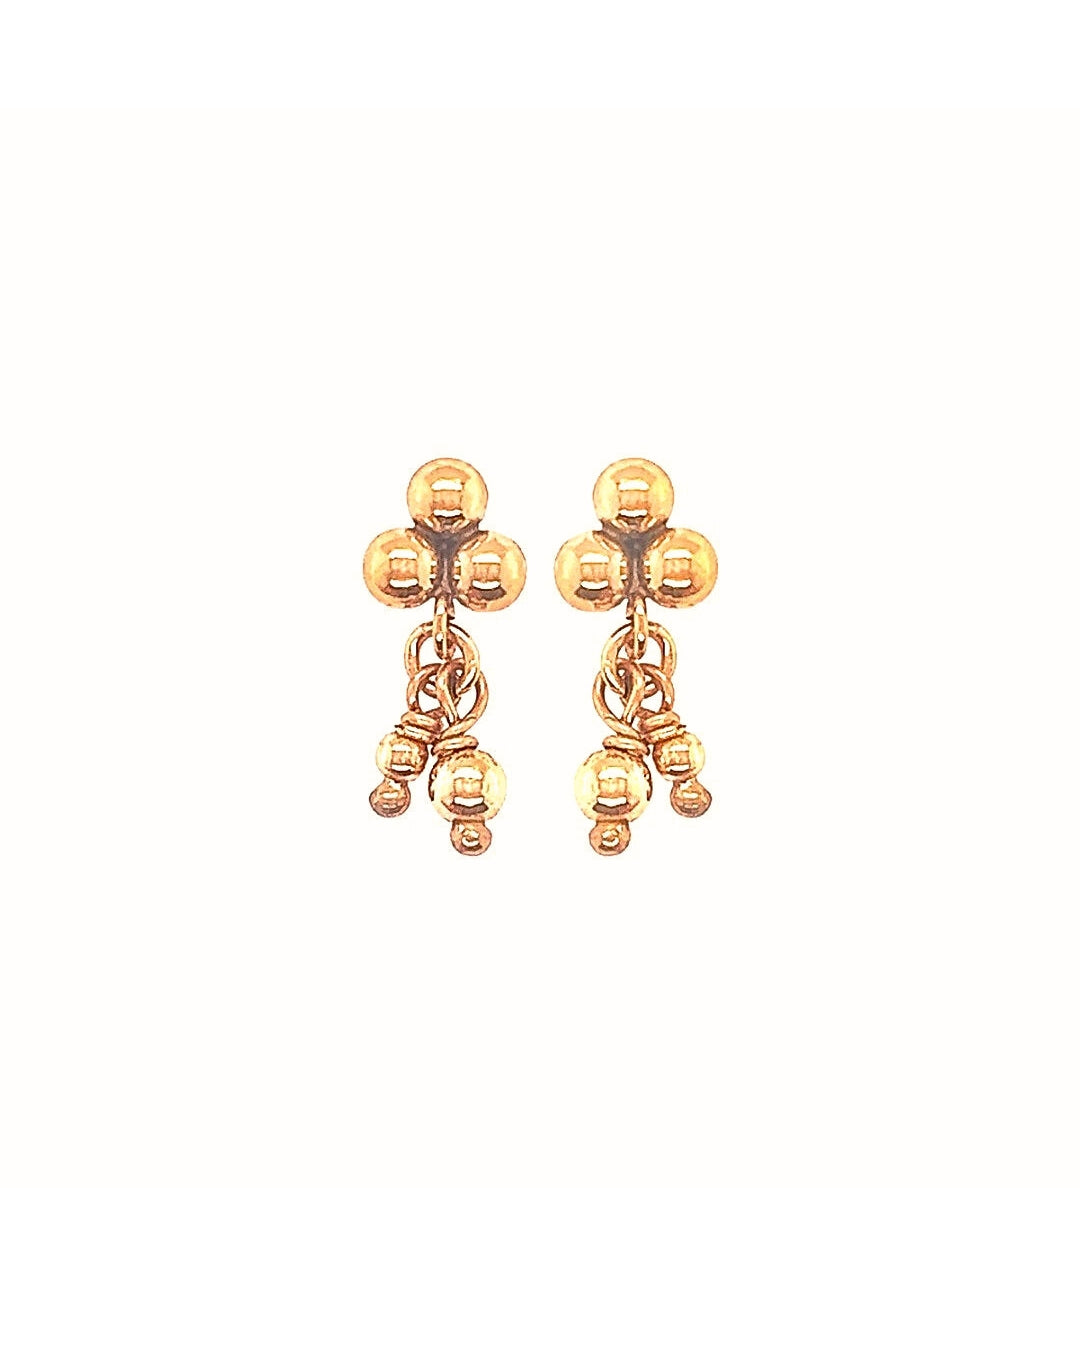 14k gold fill elemental cluster sphere earring studs